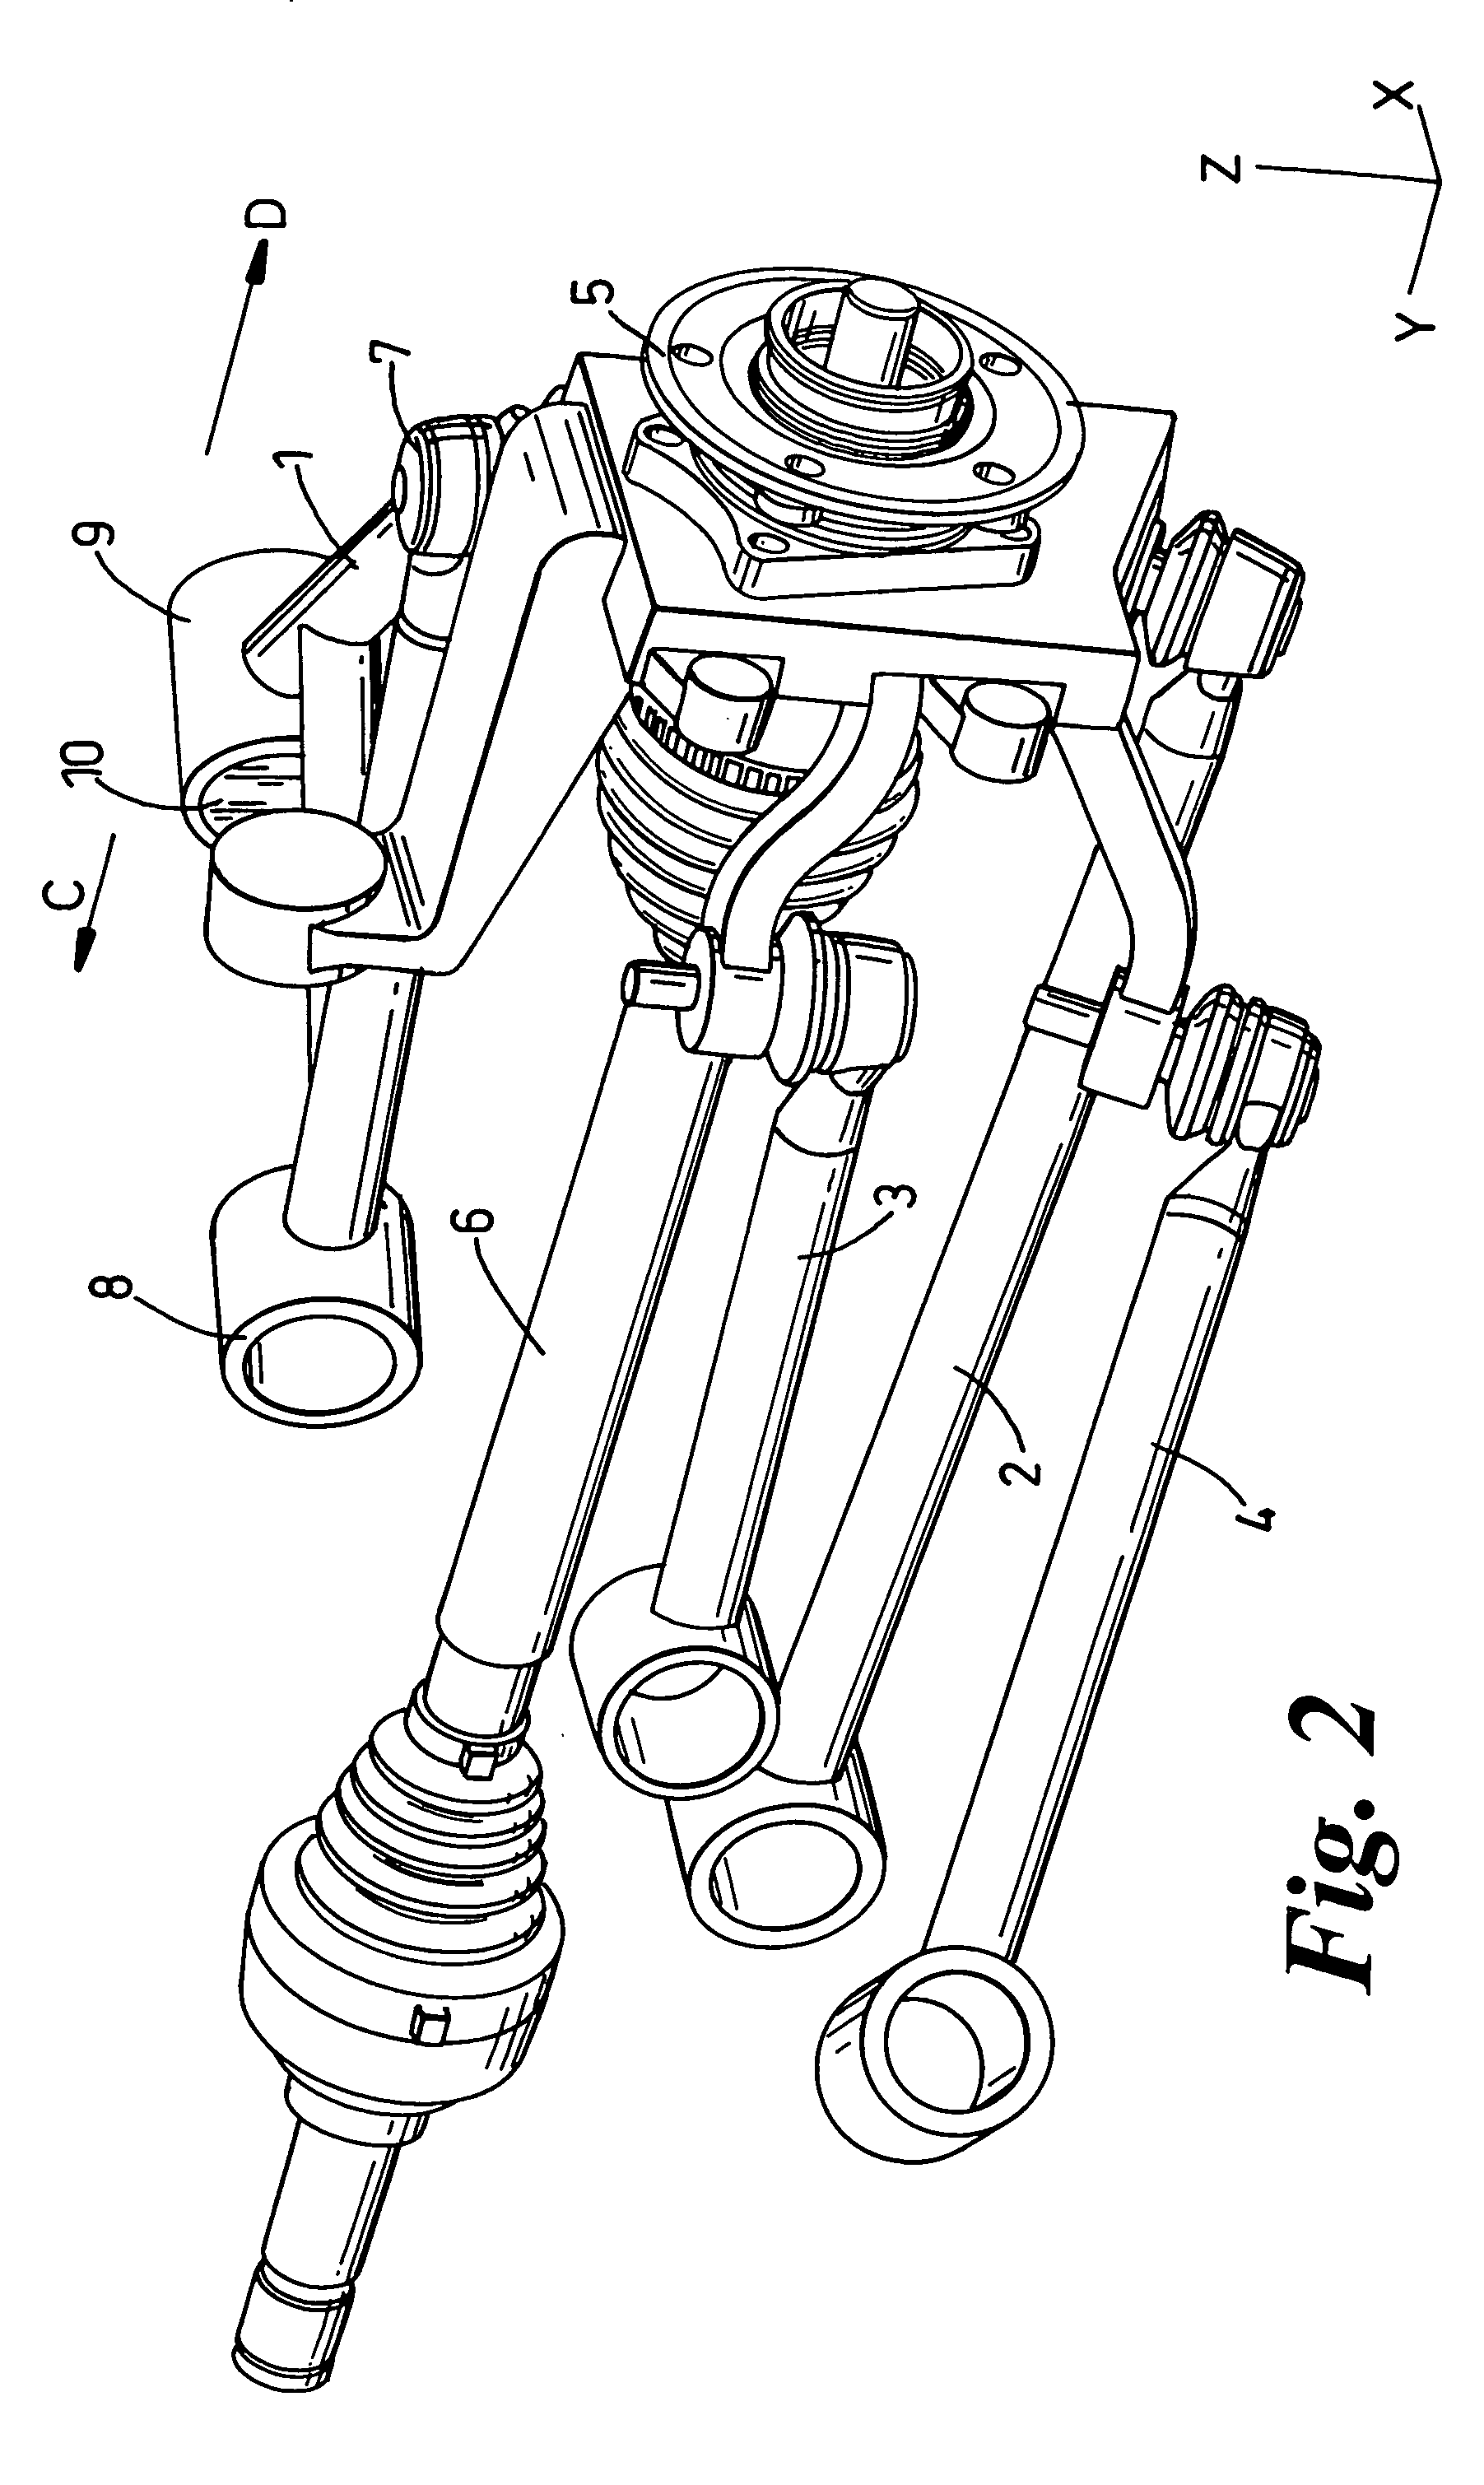 Four-link vehicle suspension system